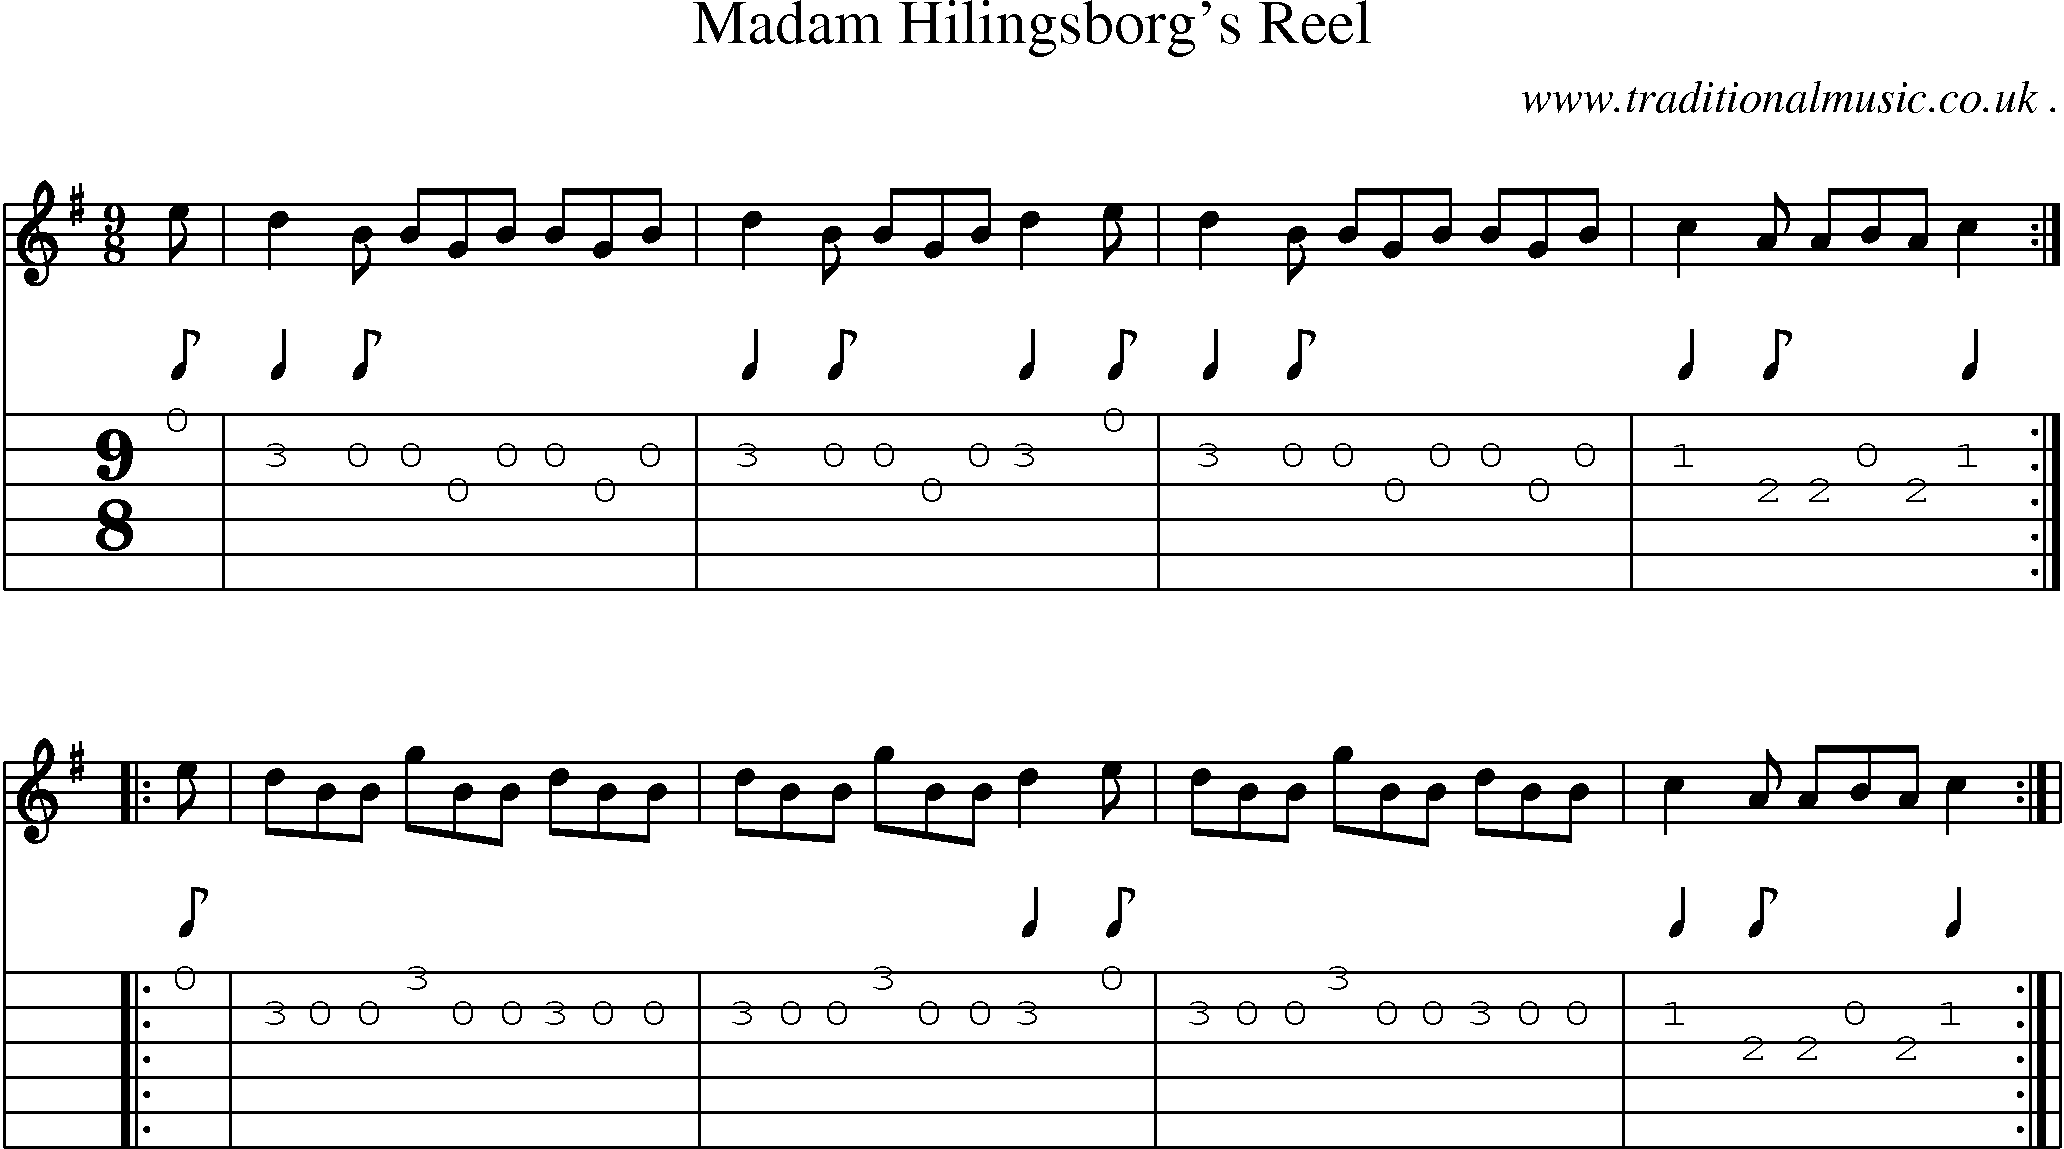 Sheet-Music and Guitar Tabs for Madam Hilingsborgs Reel